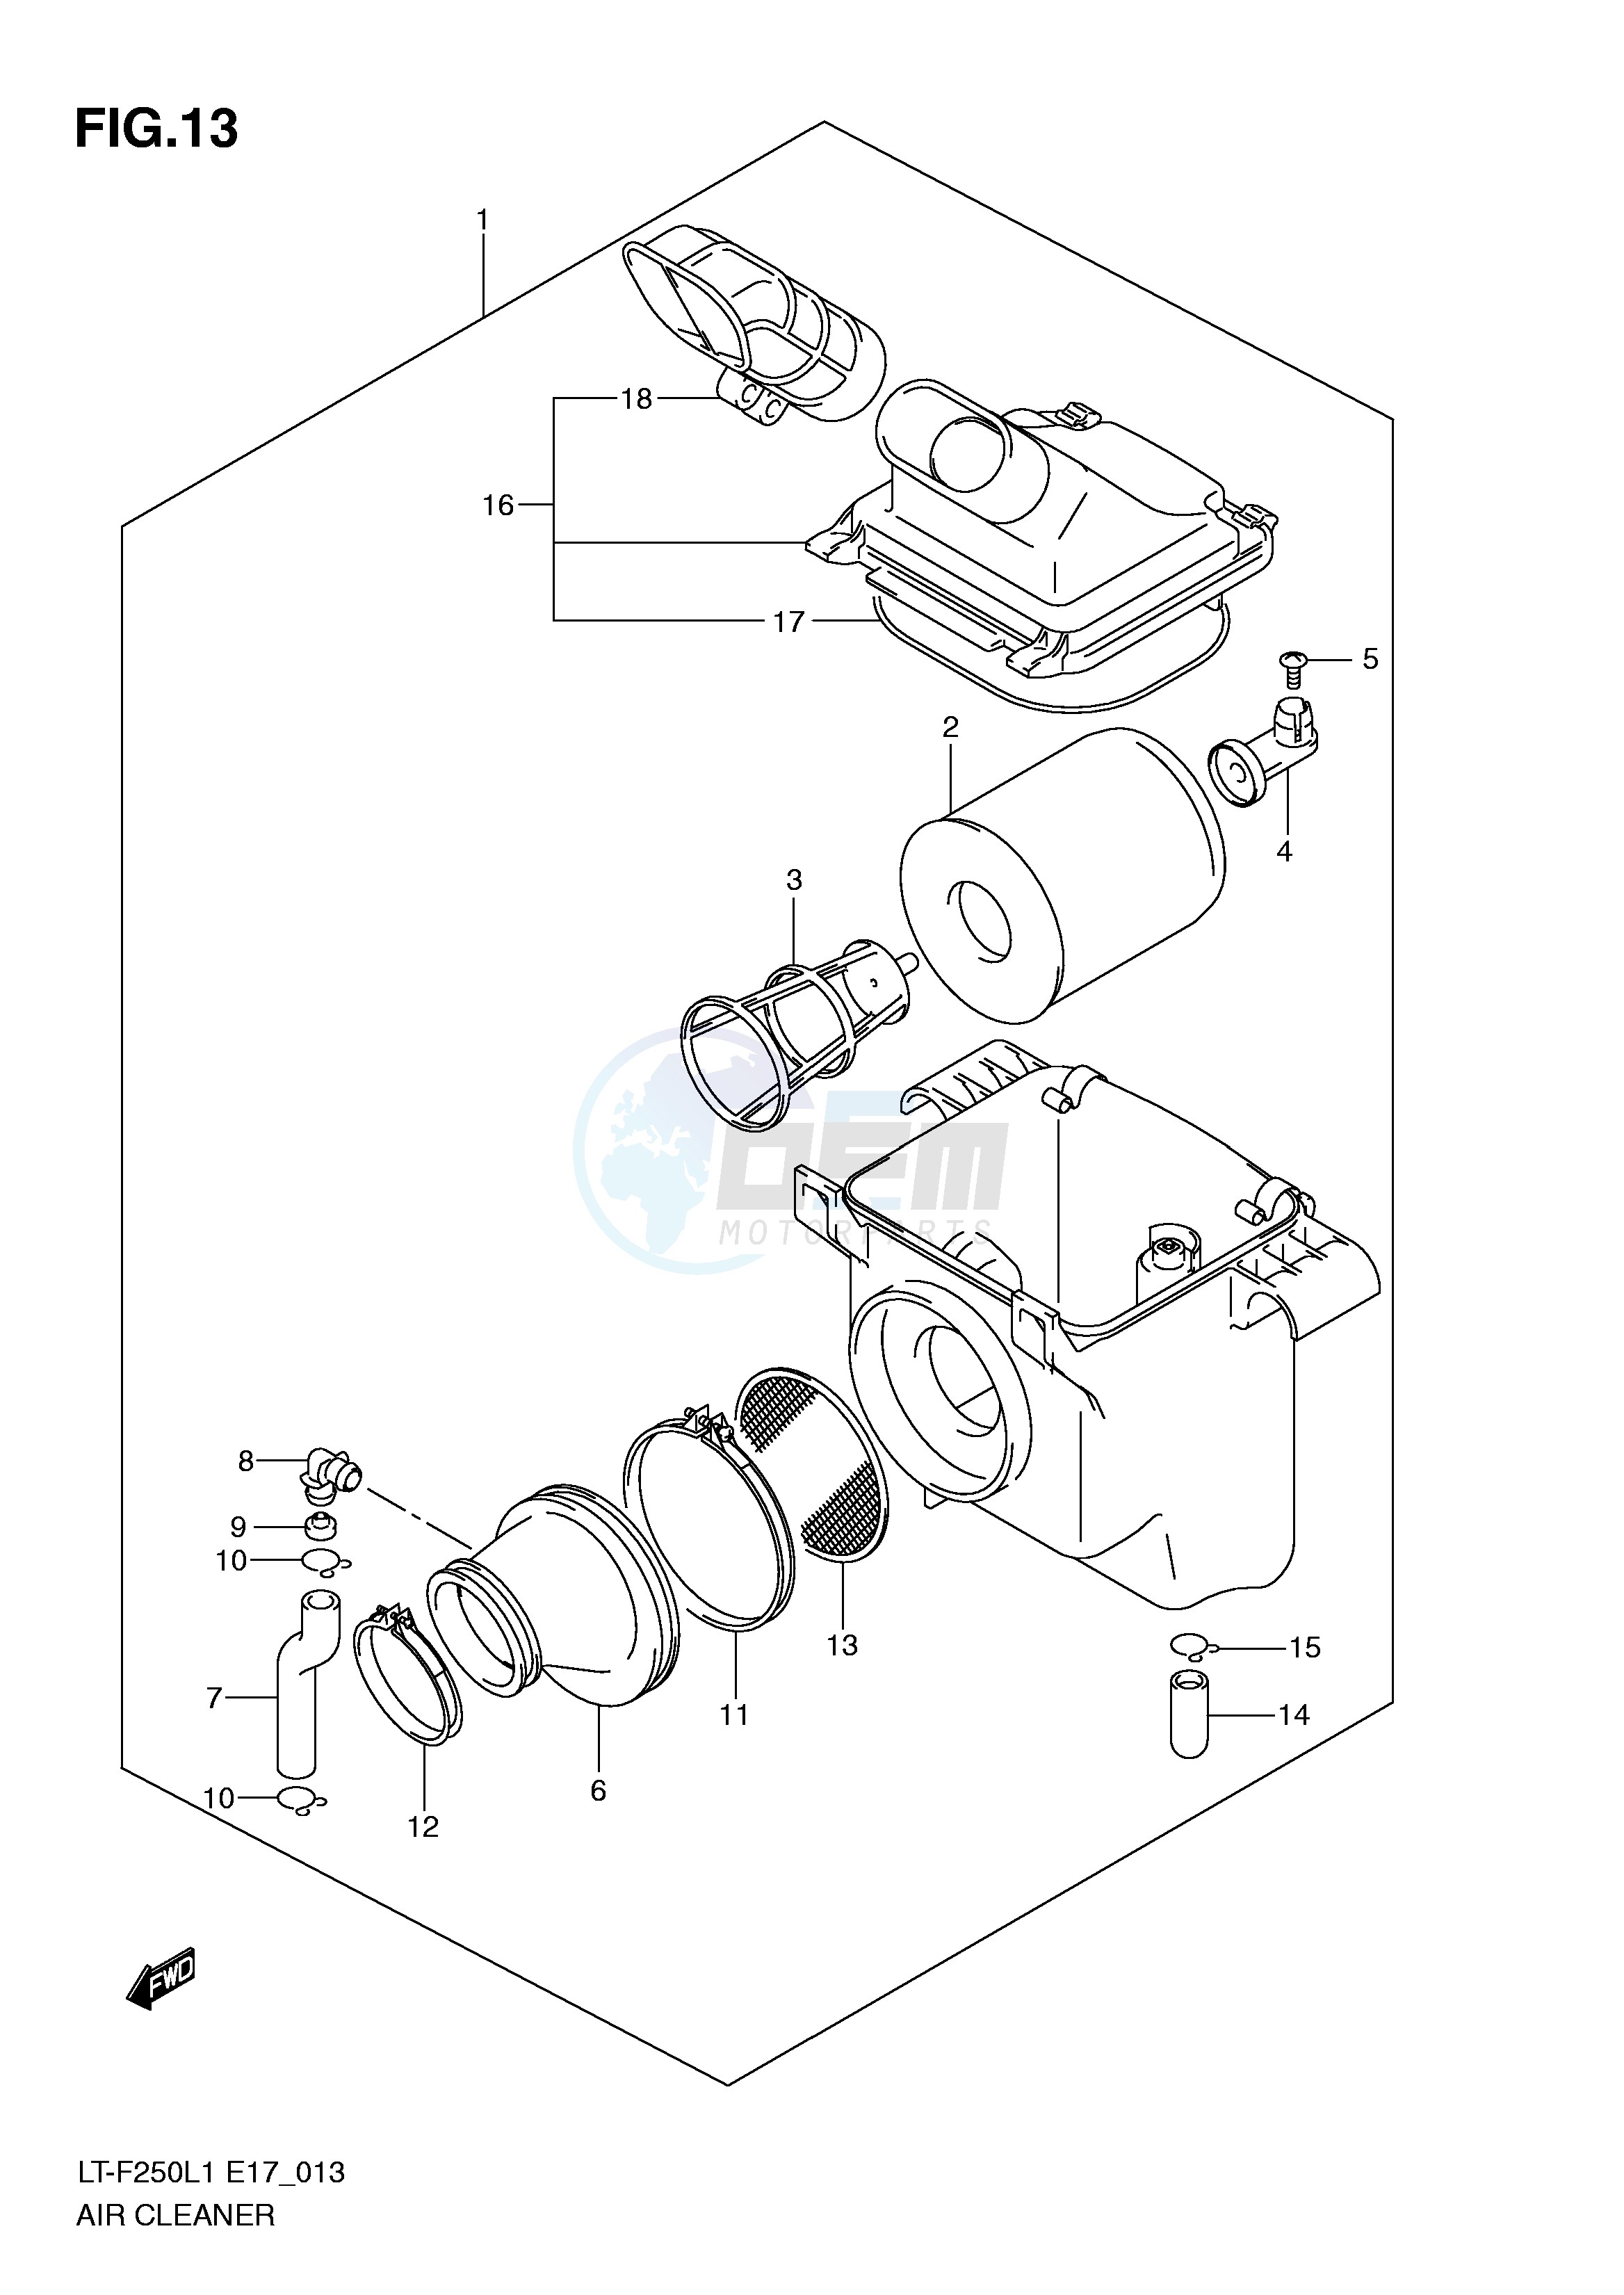 AIR CLEANER (LT-F250L1 E24) blueprint